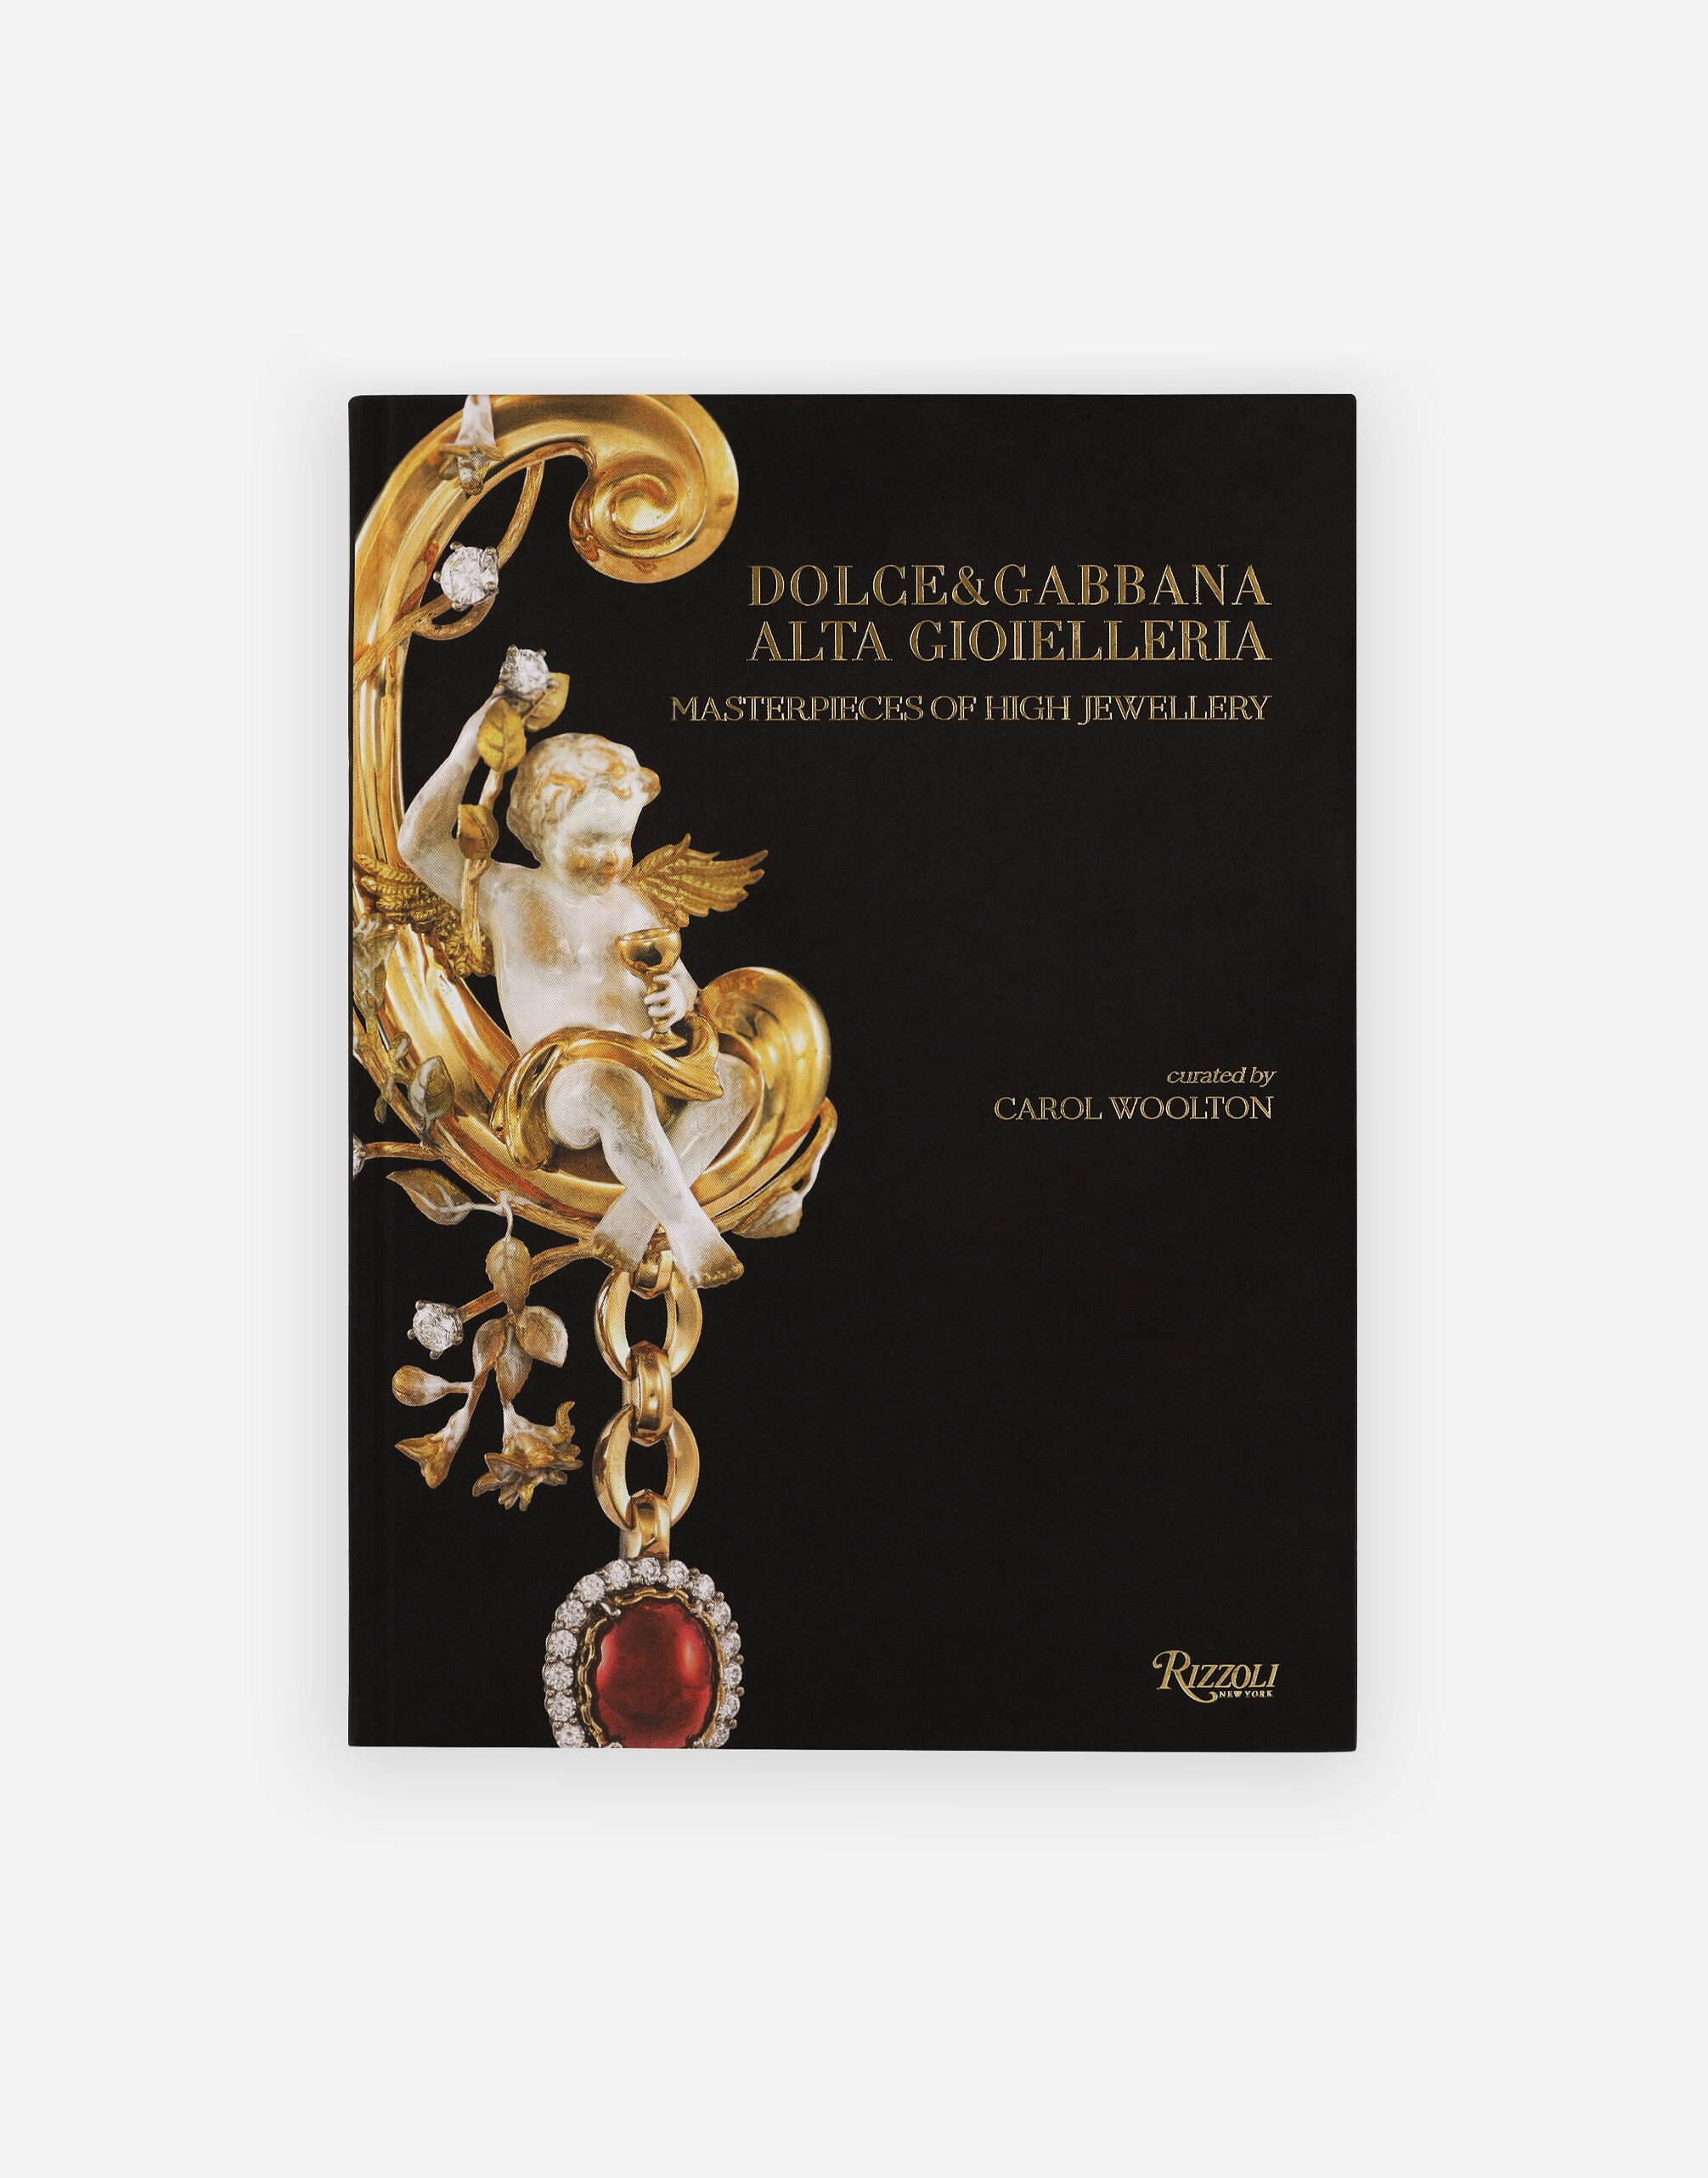 Dolce & Gabbana Dolce & Gabbana Alta Gioielleria: Masterpieces of High Jewellery Multicolor VL1132VLTW2